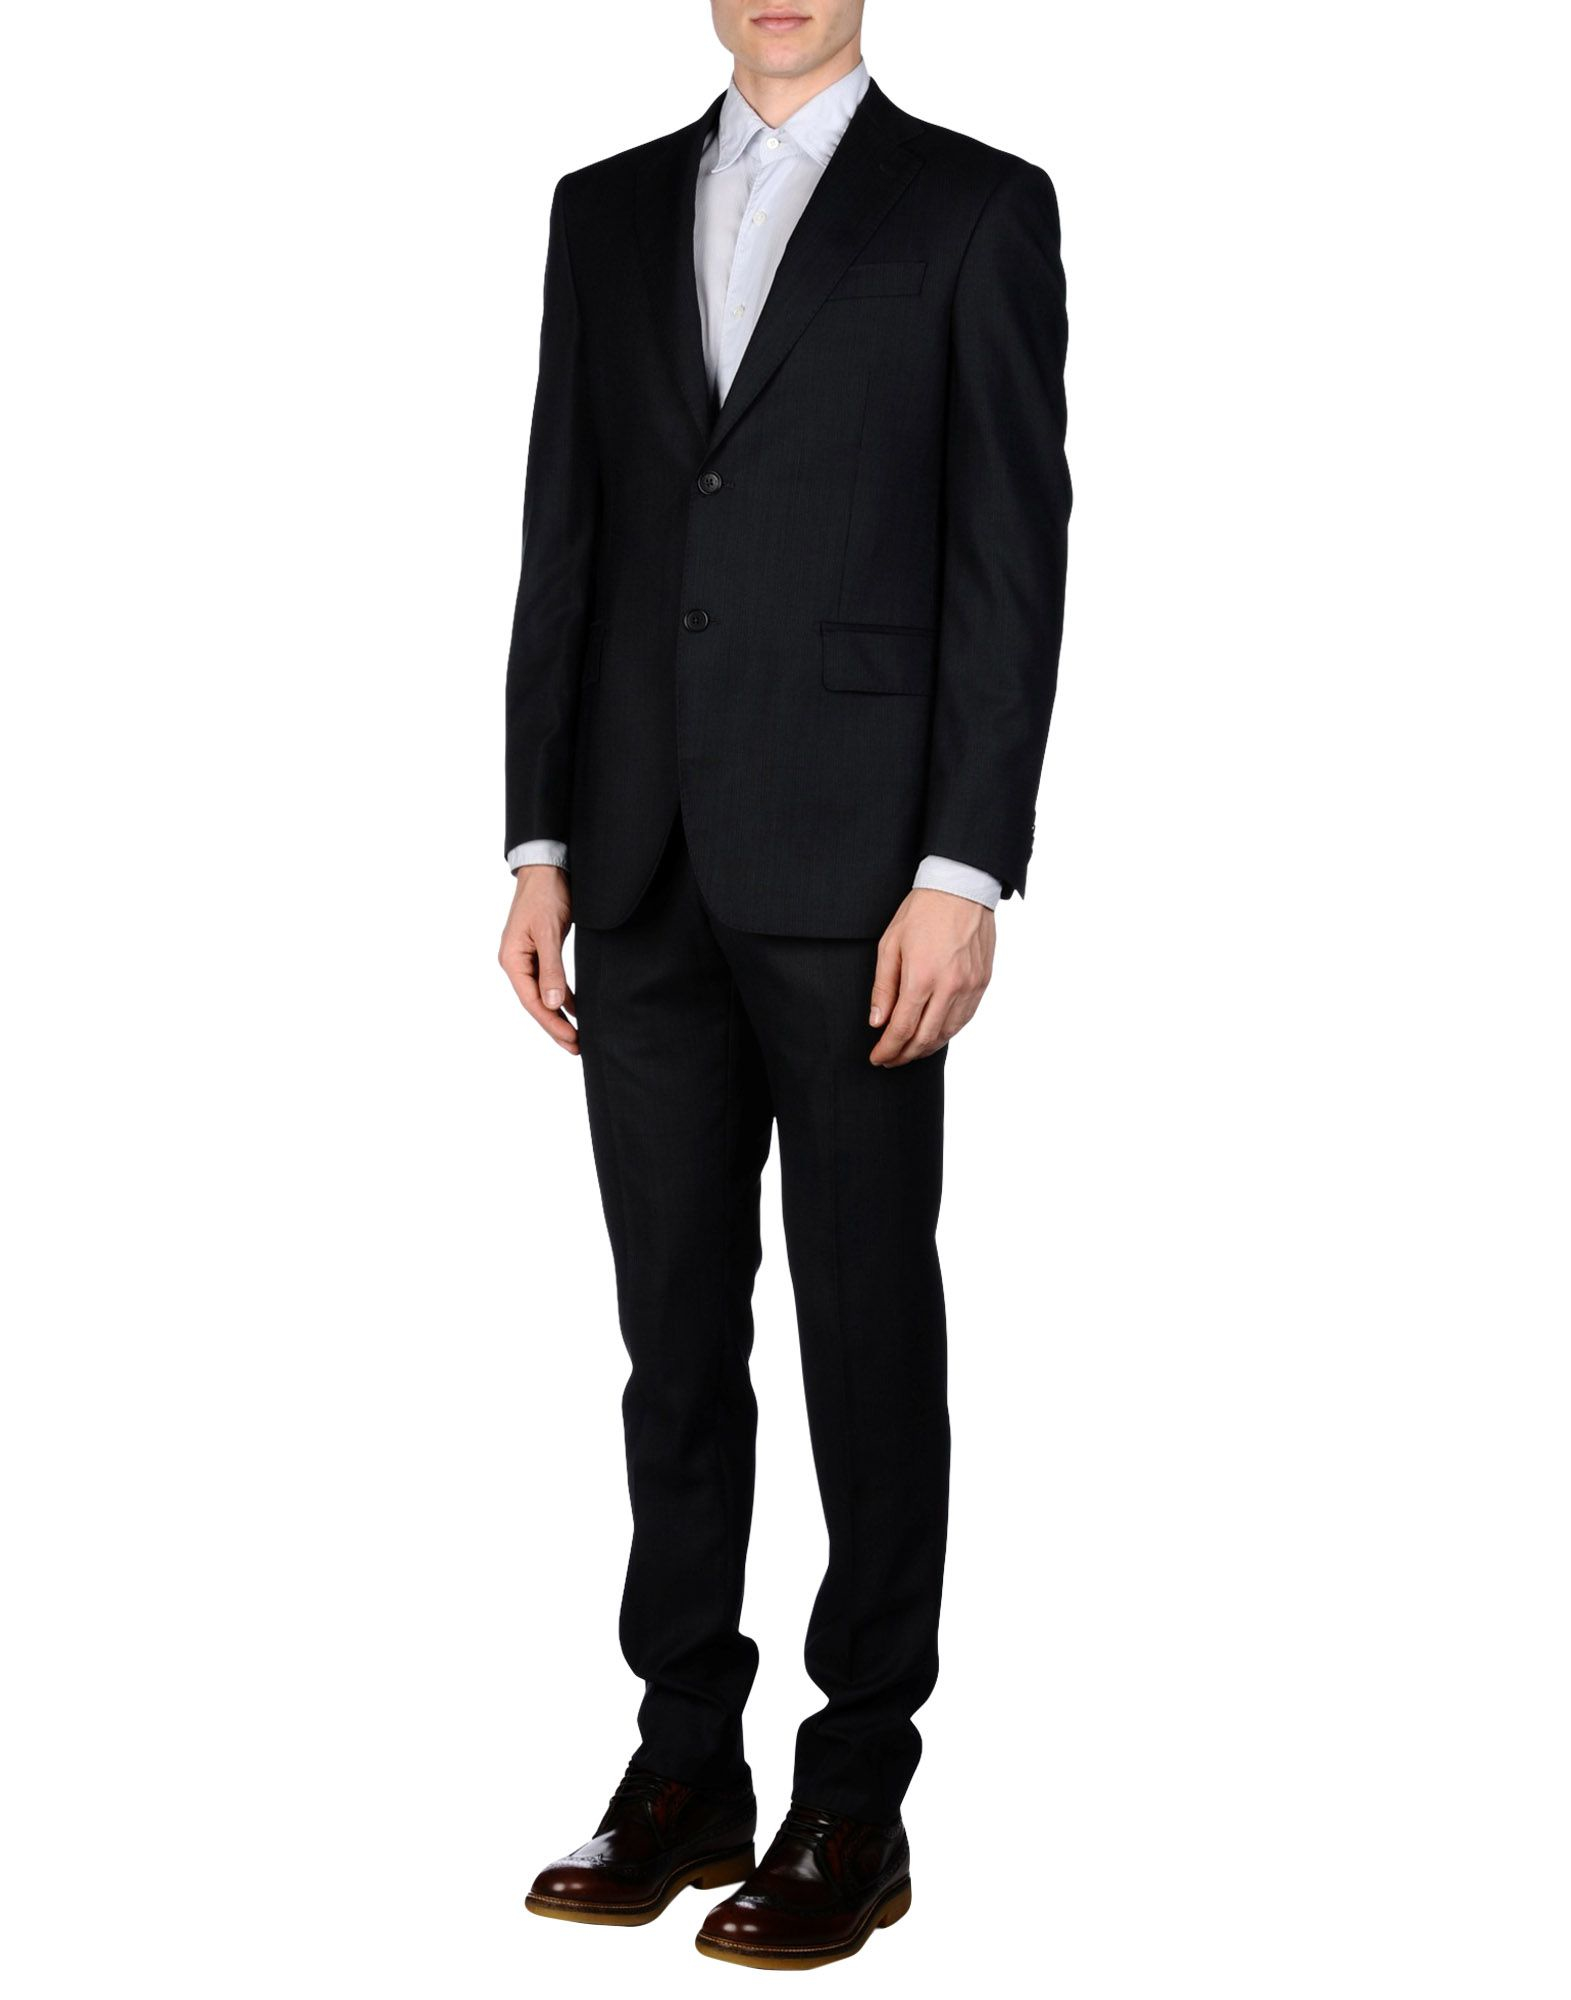 Lyst - Balmain Suit in Black for Men